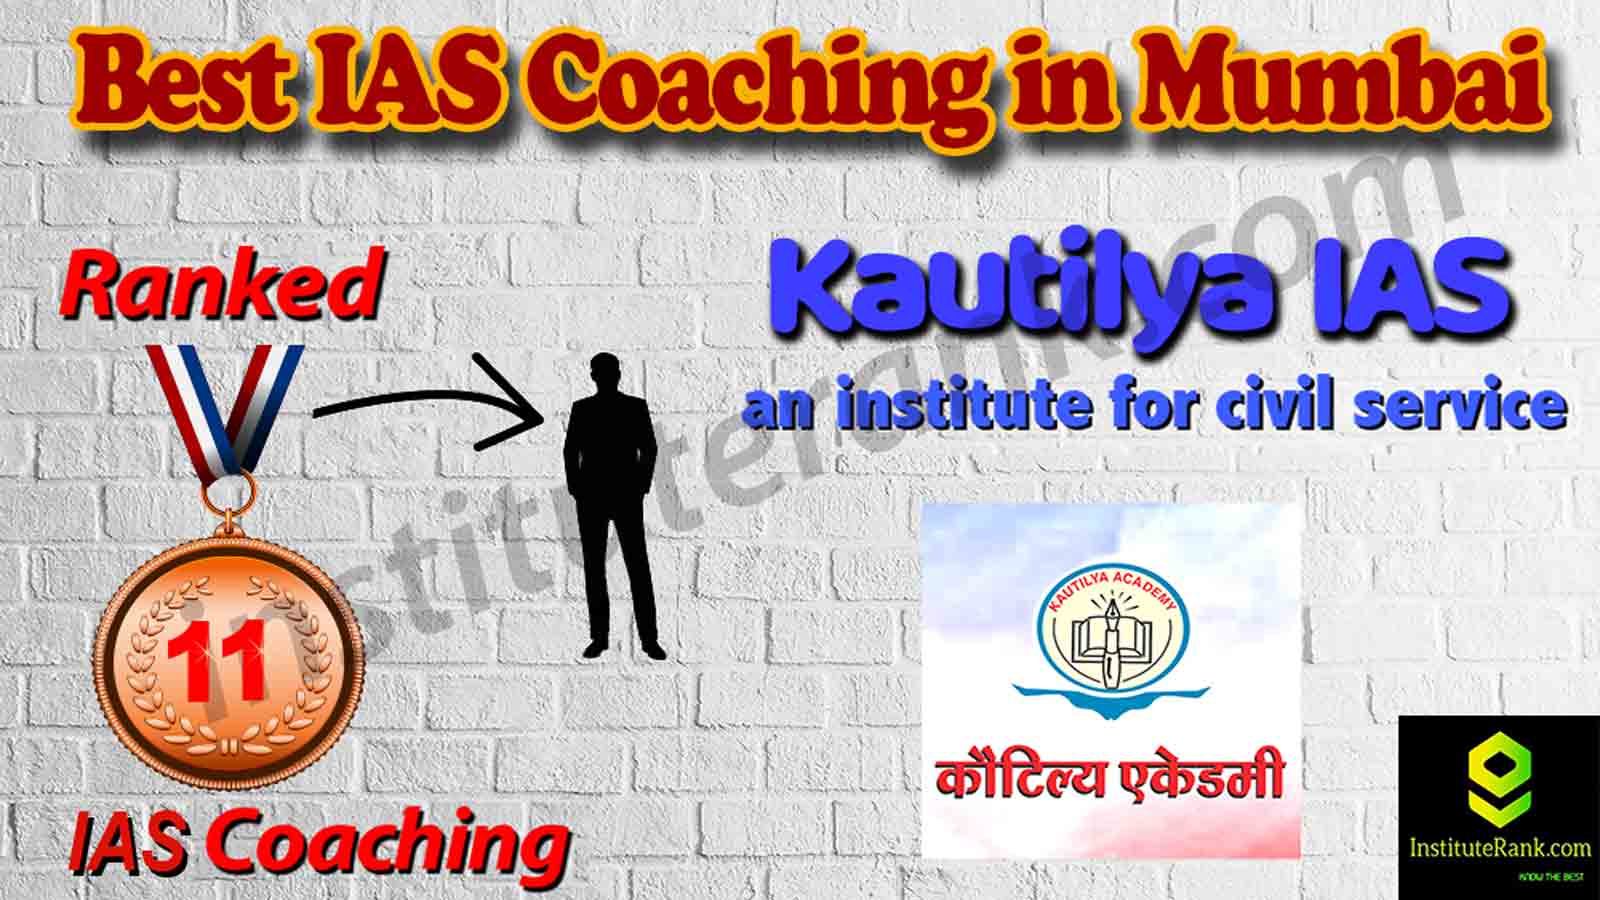 Rank 11 Best IAS Coaching in Mumbai